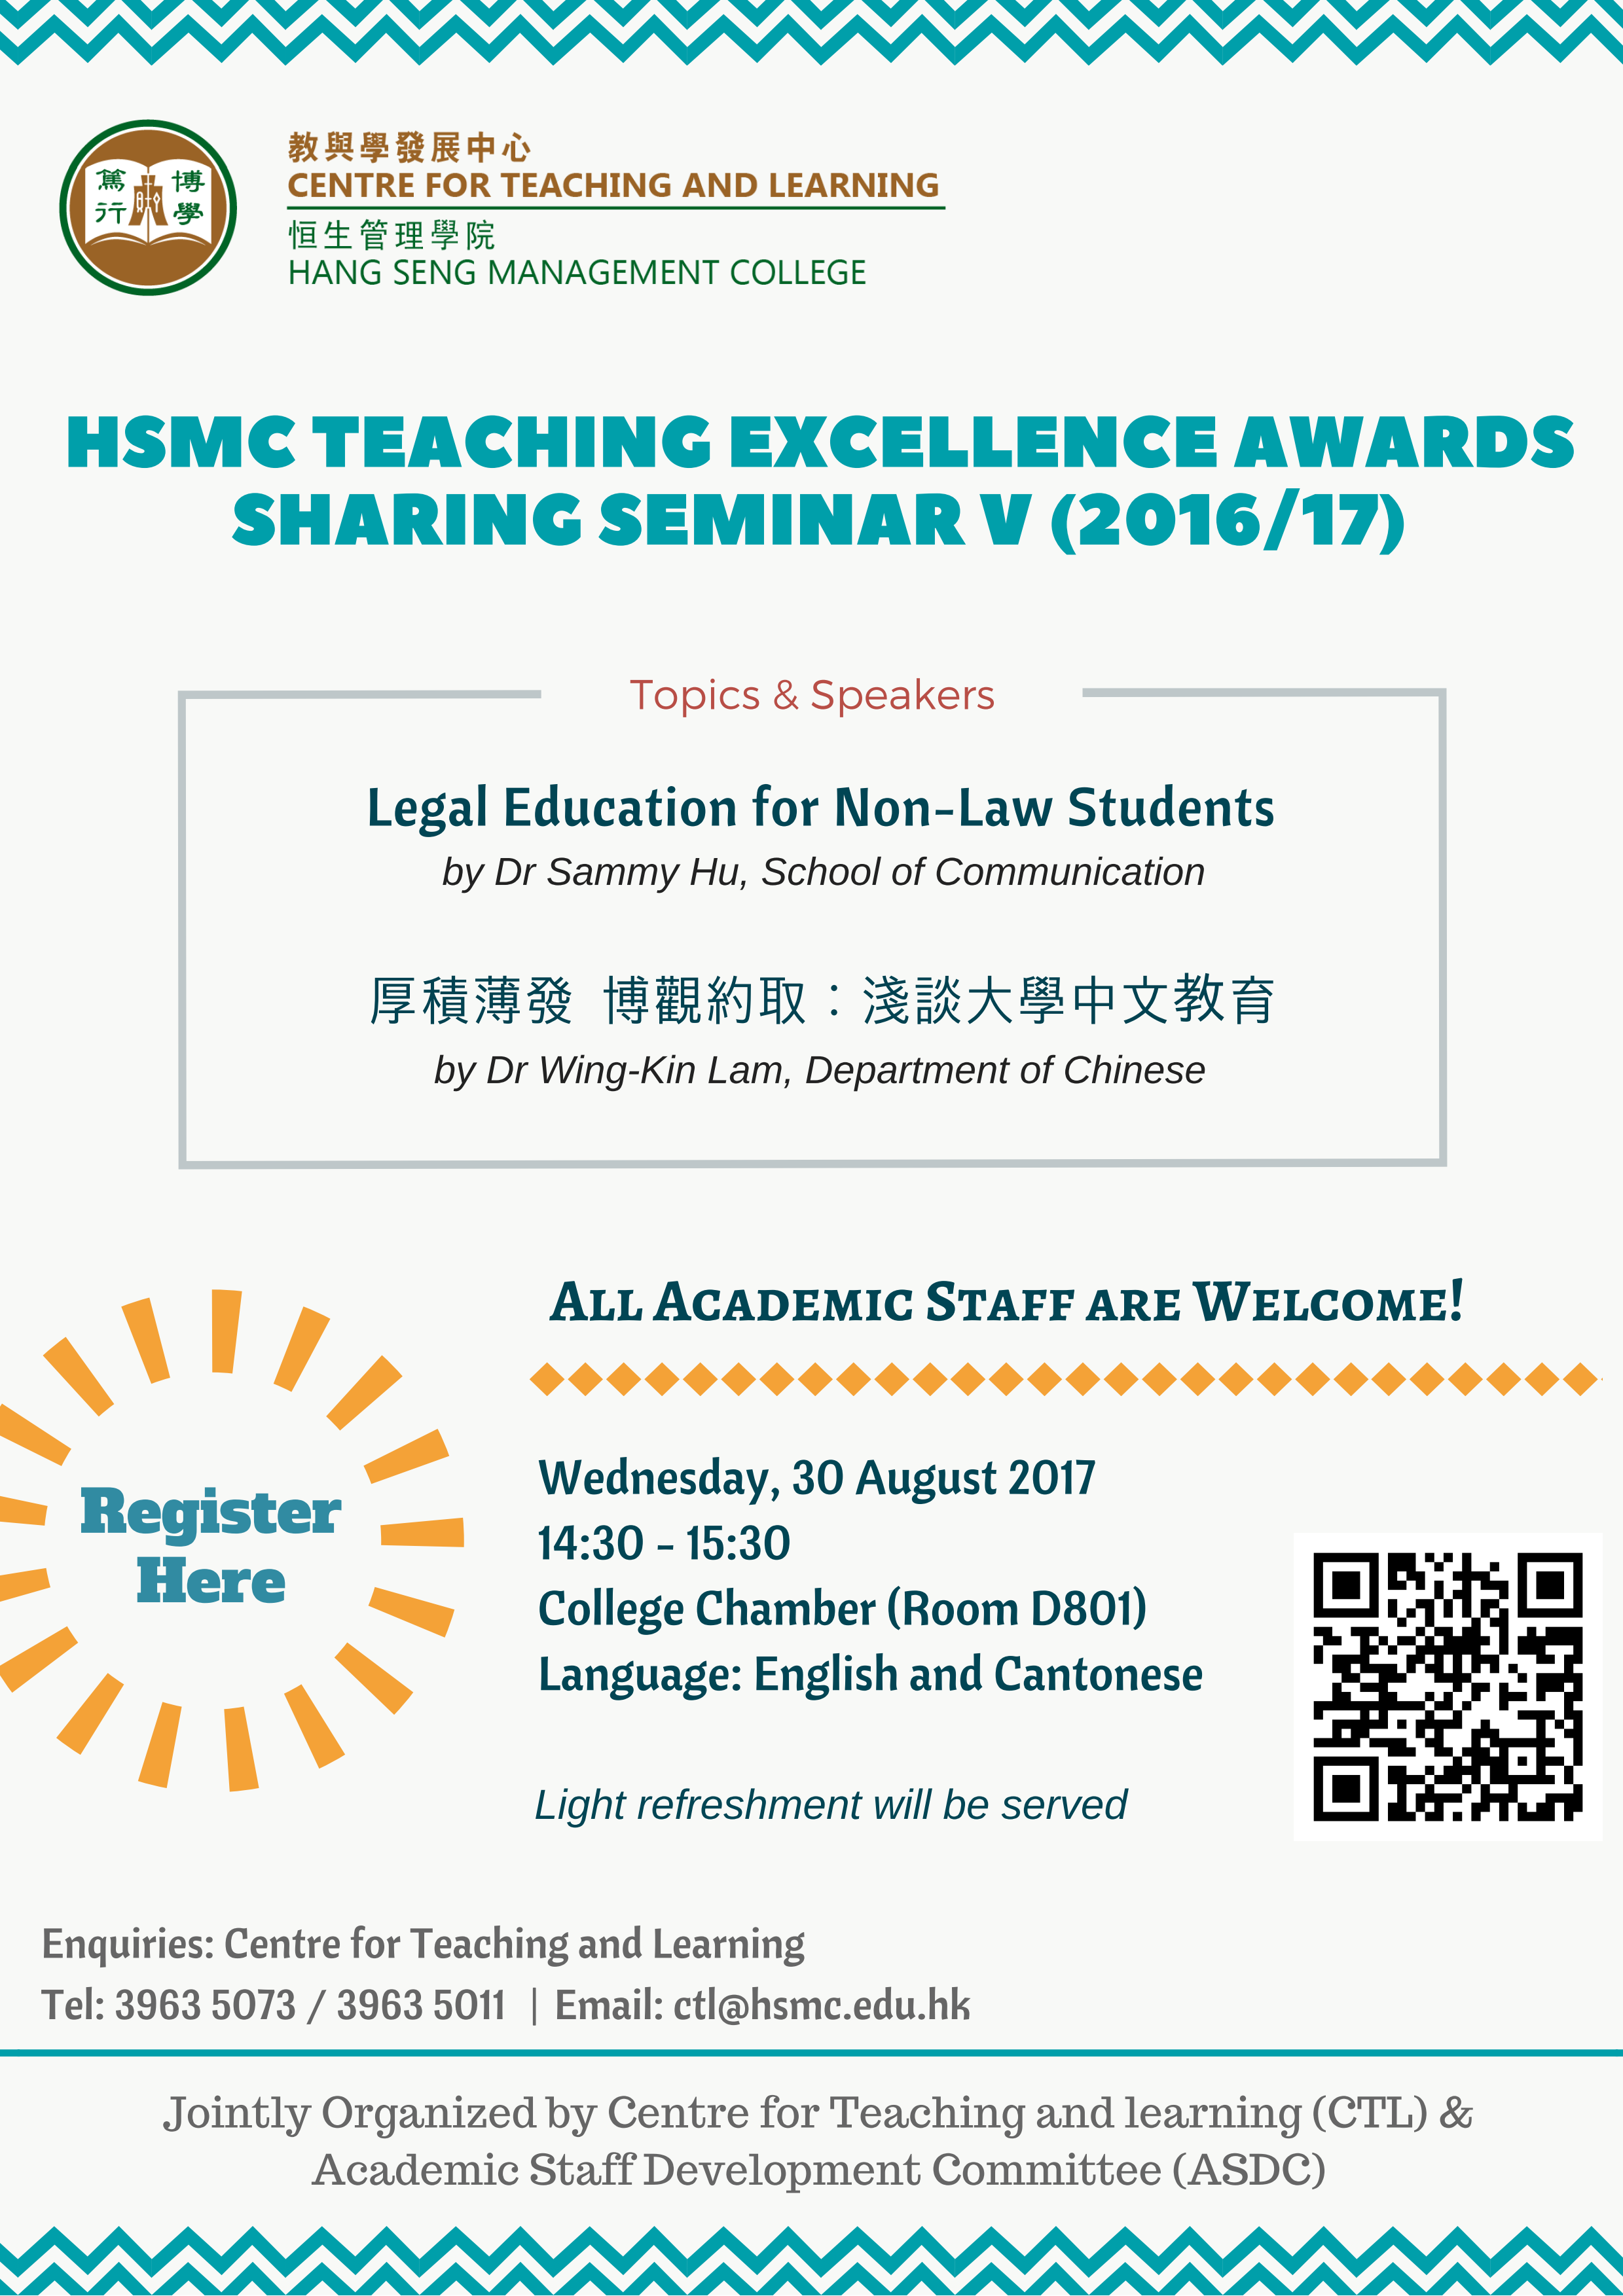 HSMC Teaching Excellence Awards Sharing Seminar V (201617)